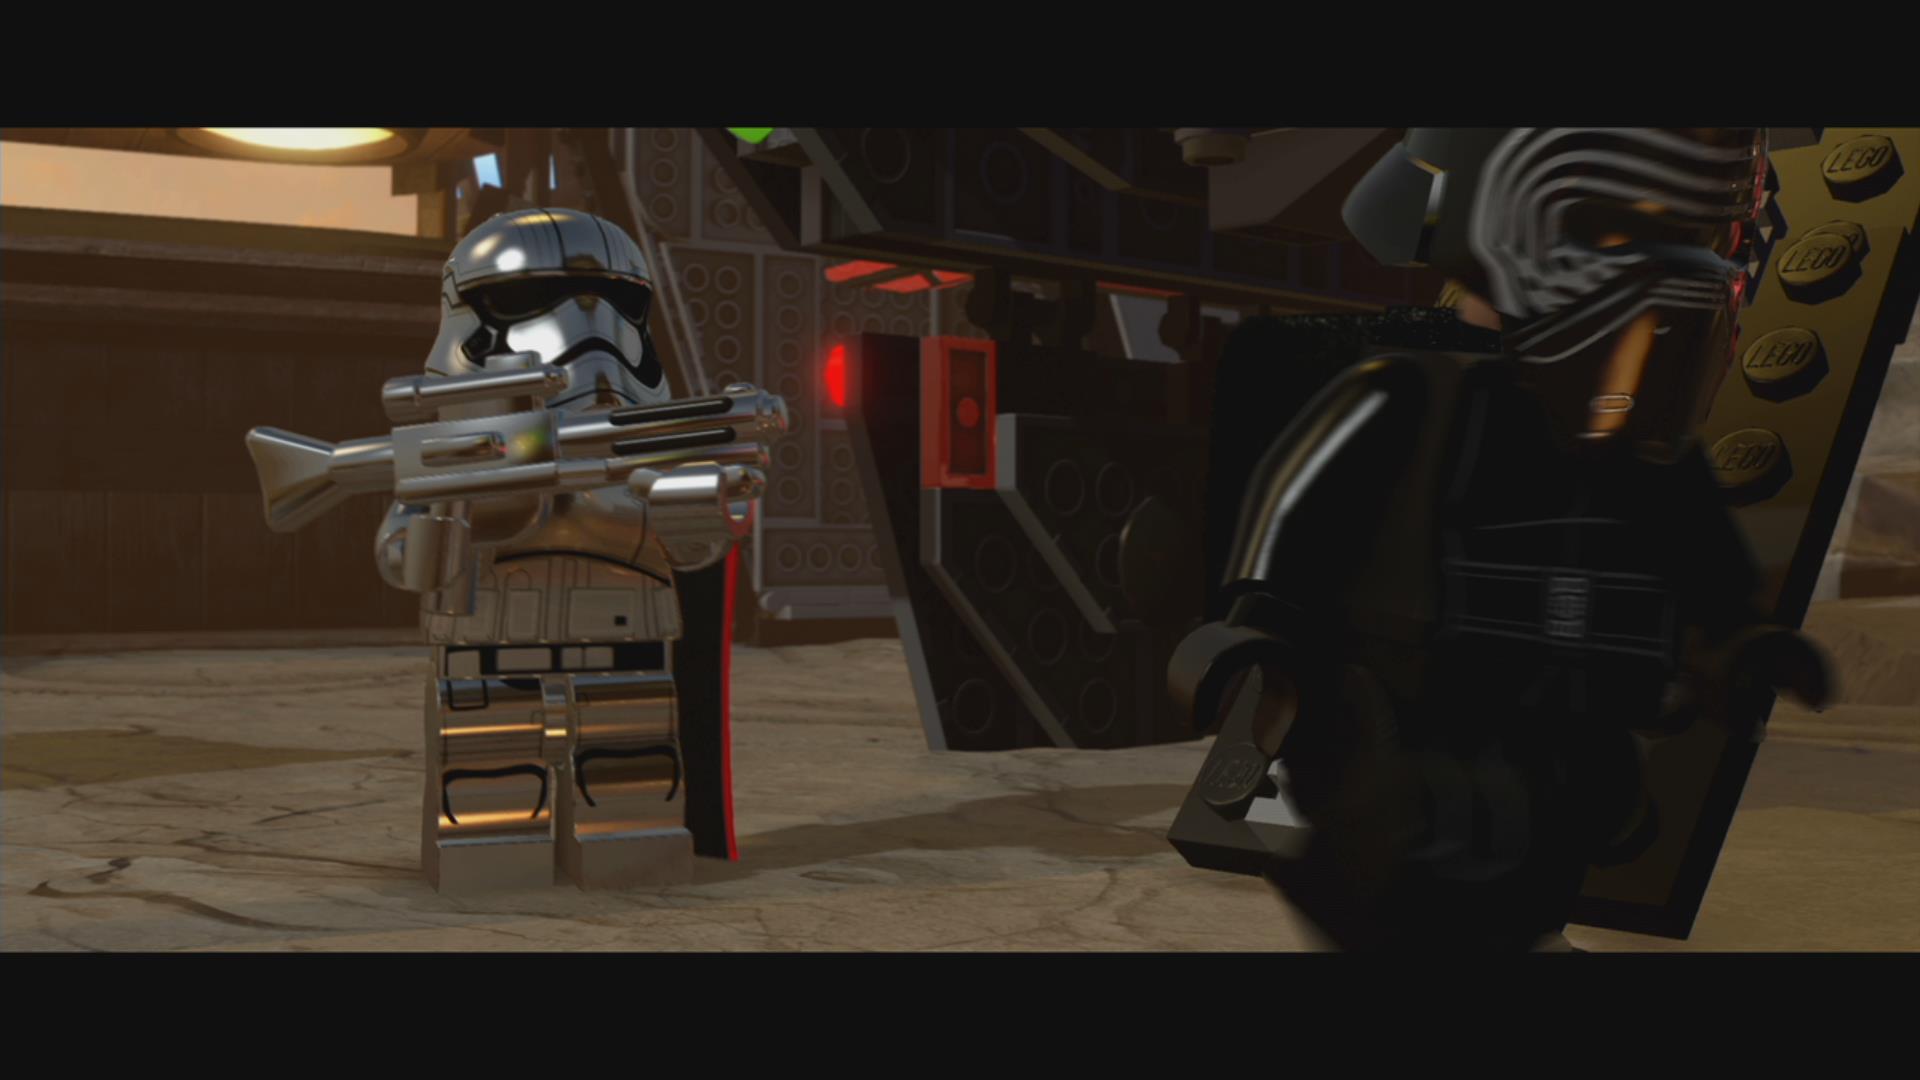 LEGO Star Wars: The Force Awakens: The Kotaku Review